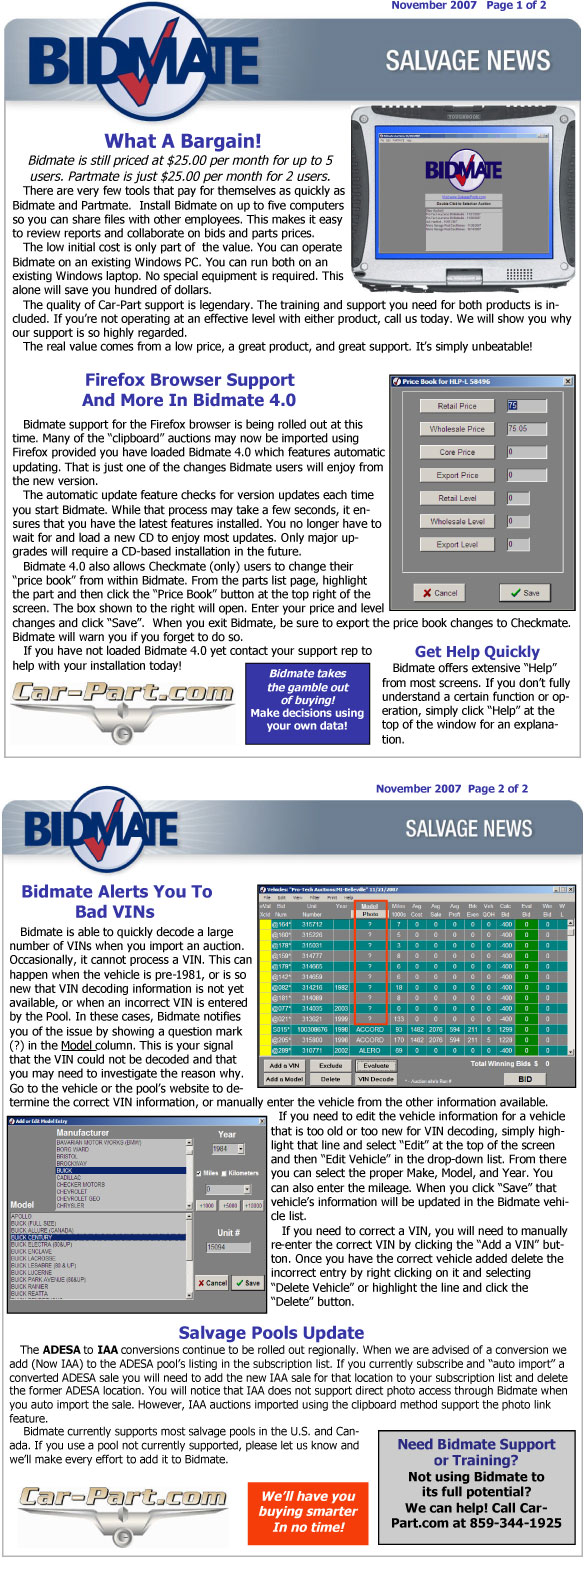 Bidmate Salvage News - November 2007